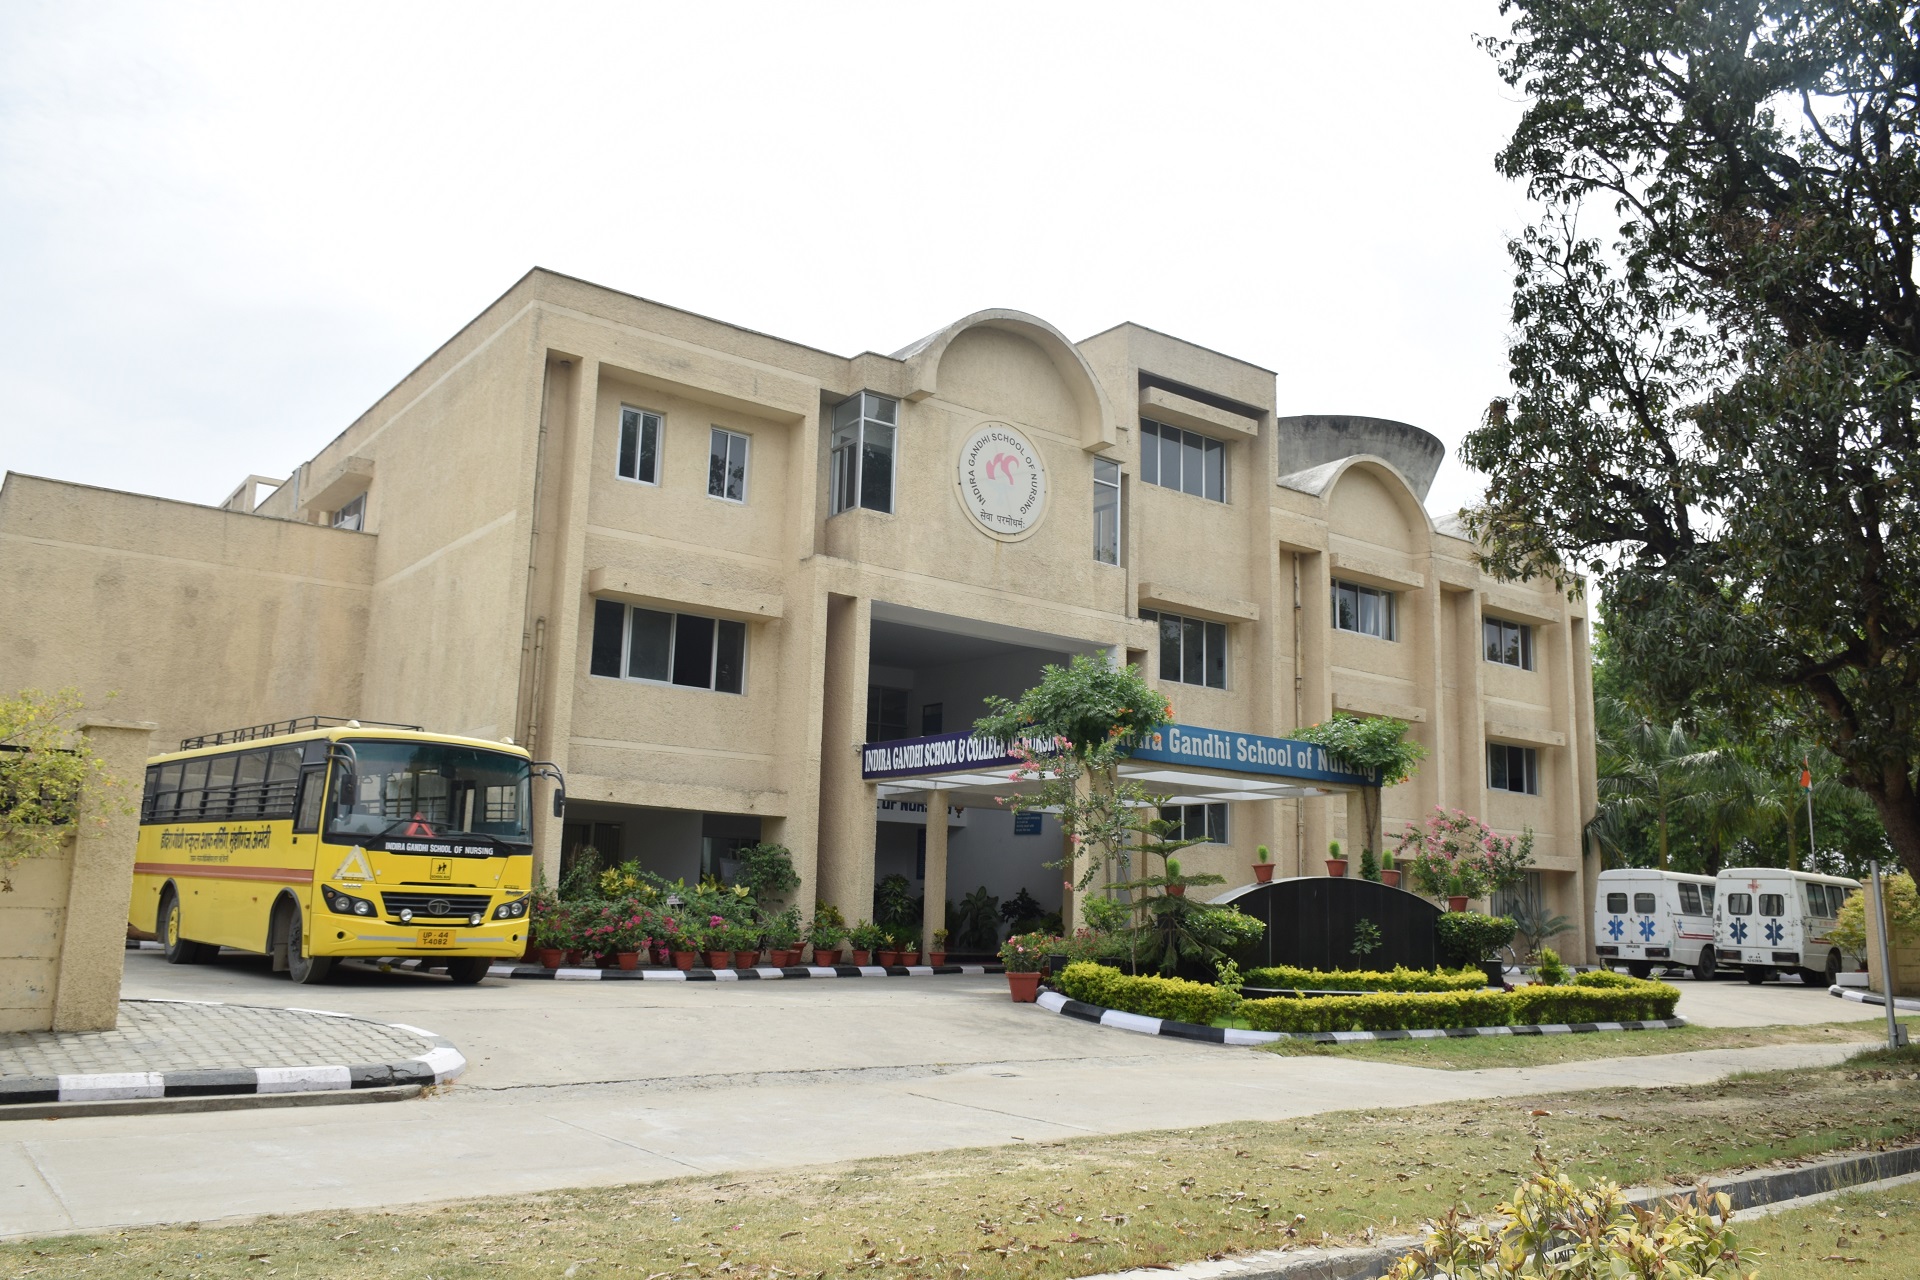 Indira Gandhi School and College of Nursing Image